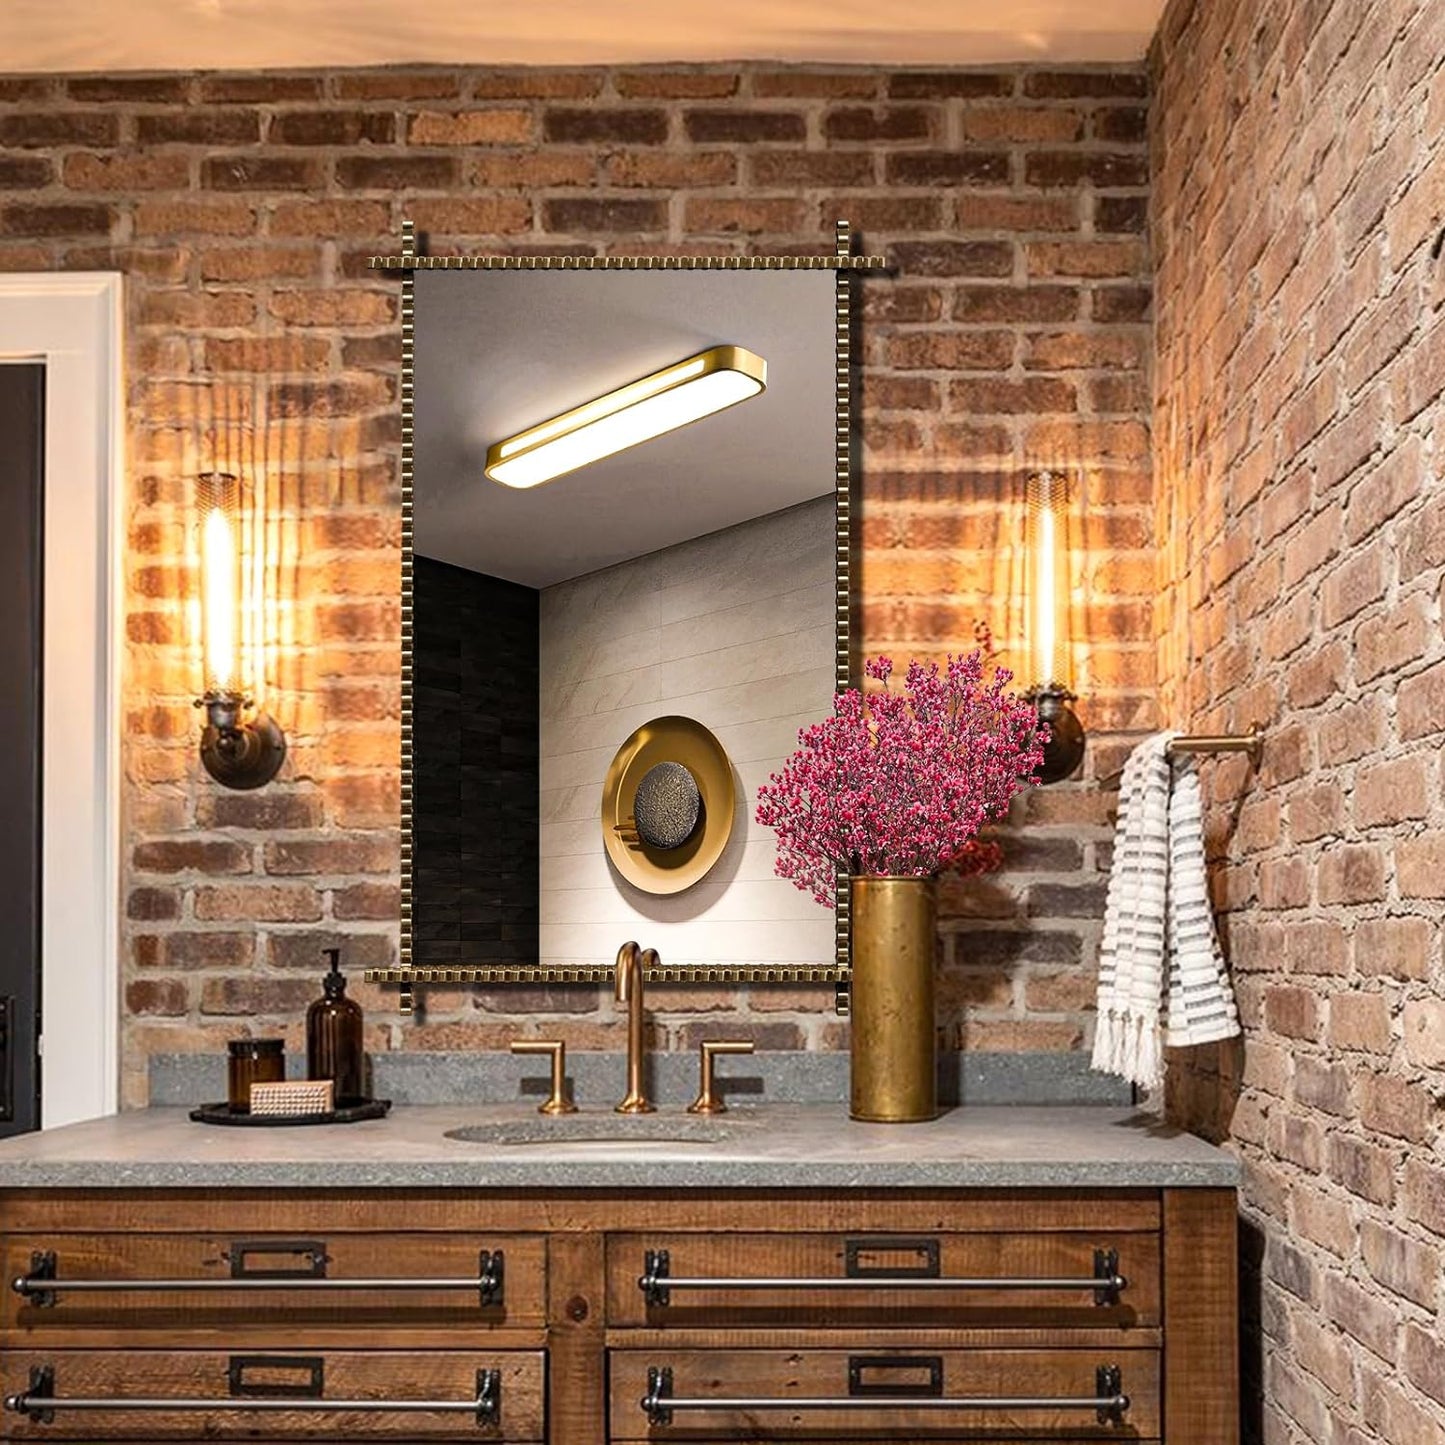 JNFUZ 24x36 Inch Bathroom Vanity Mirror, Lron Frame Wall Mirror for, Bedroom, Hallway, and Home Deco, Industrial, and Retro Room Makeover Mirror, 0.6" Beveled Edge, Antique Bronze